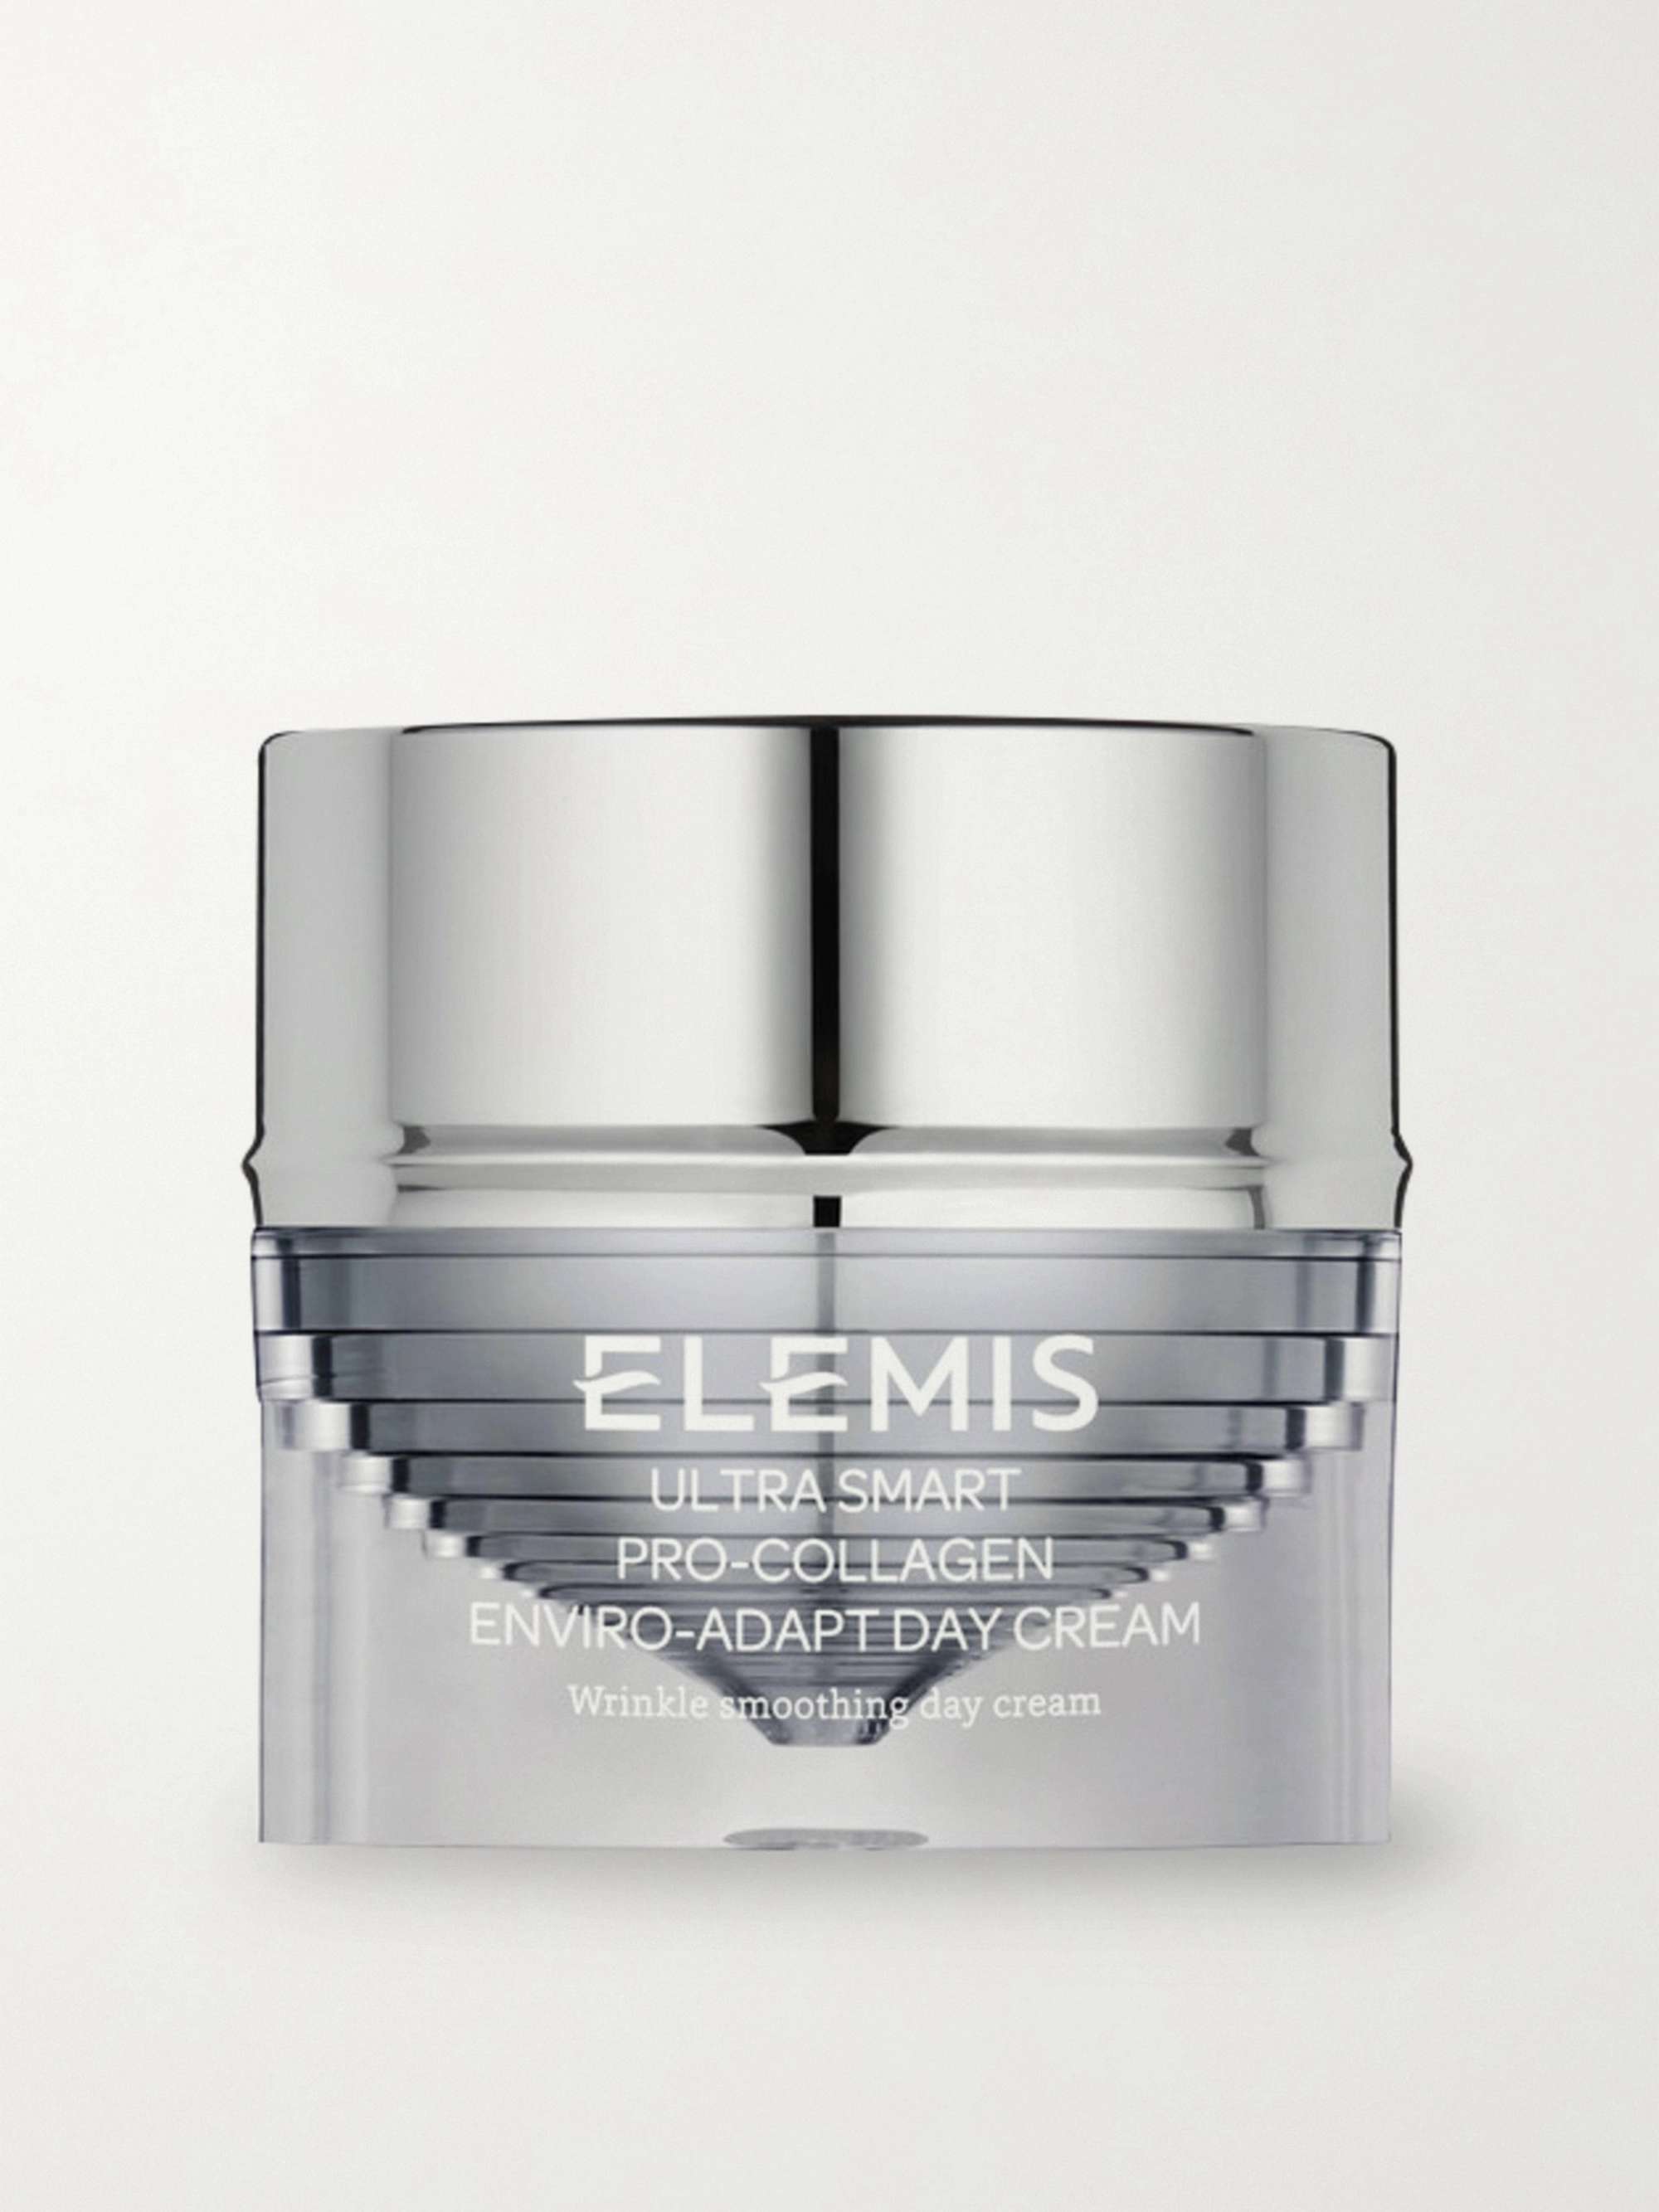 ELEMIS ULTRA SMART Pro-Collagen Enviro-Adapt Day Cream, 50ml